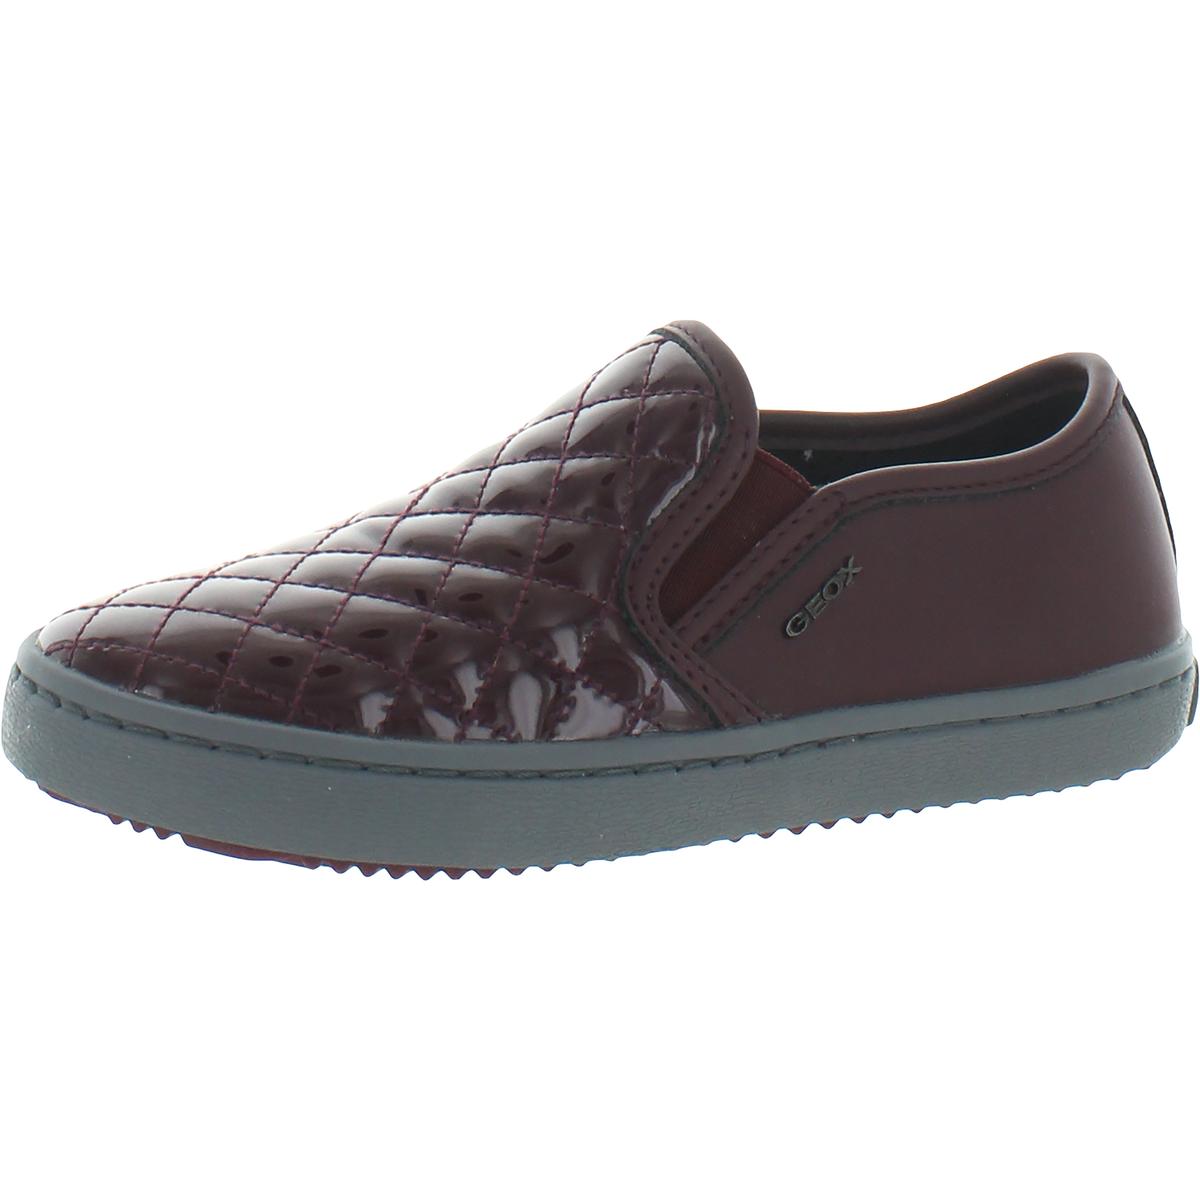 Geox Respira Girls Kalispera 27 Patent Slip-On Sneakers  Shoes BHFO 8816 